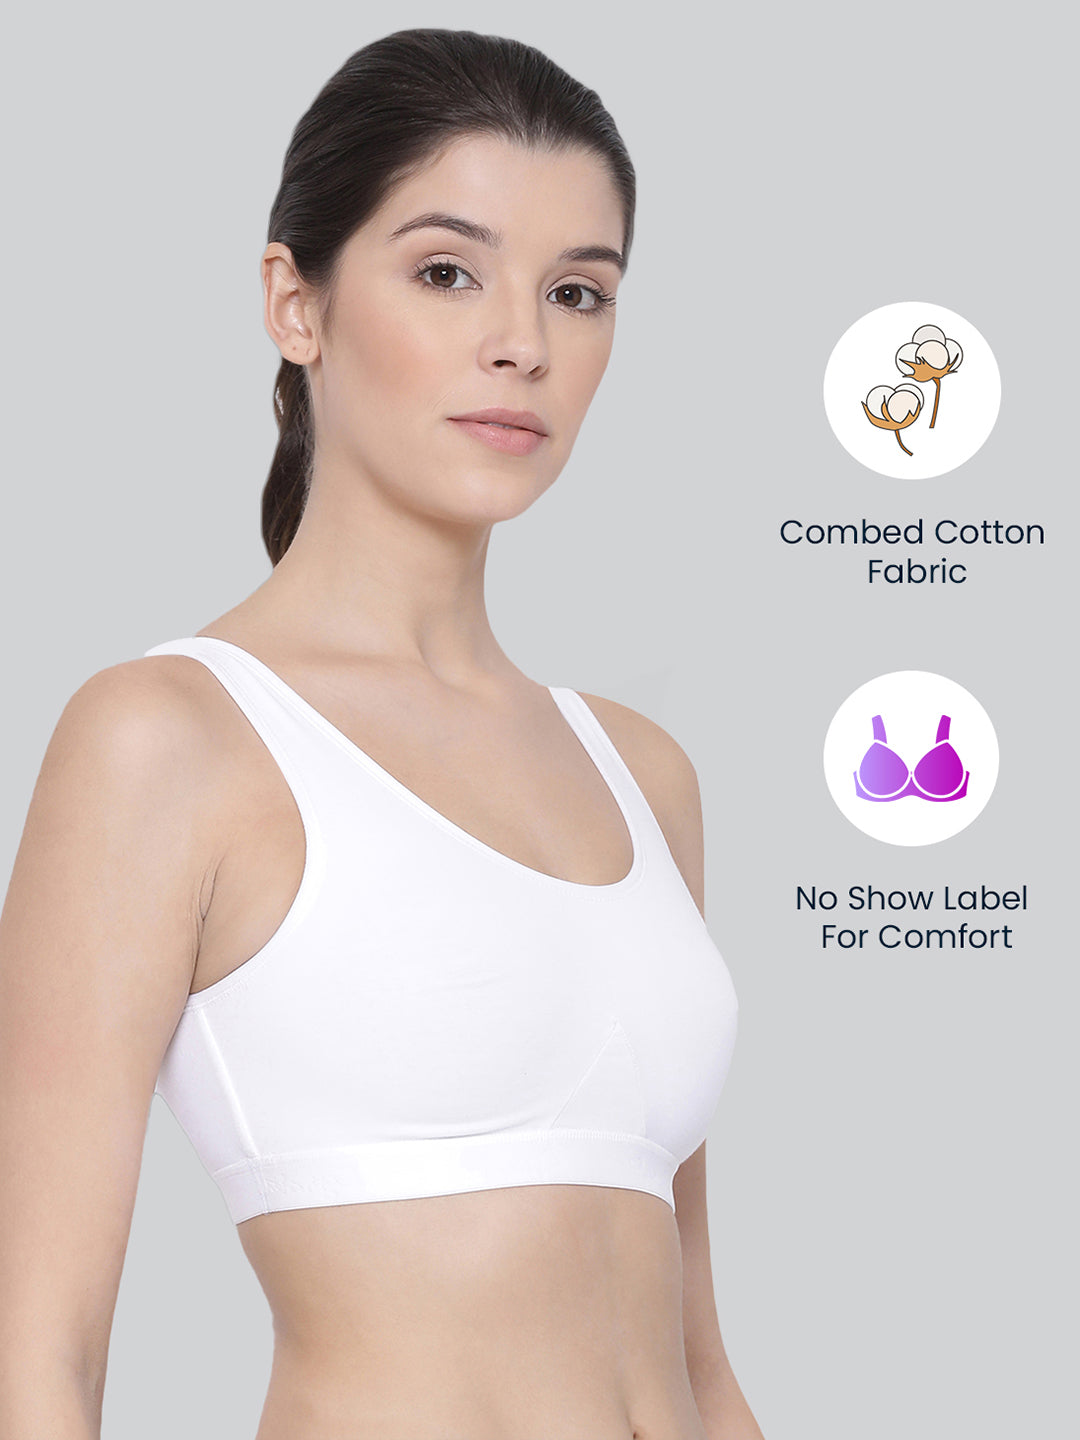 Buy Lyra 541 Premium Cotton Non-Padded Beginners Bra for Women at